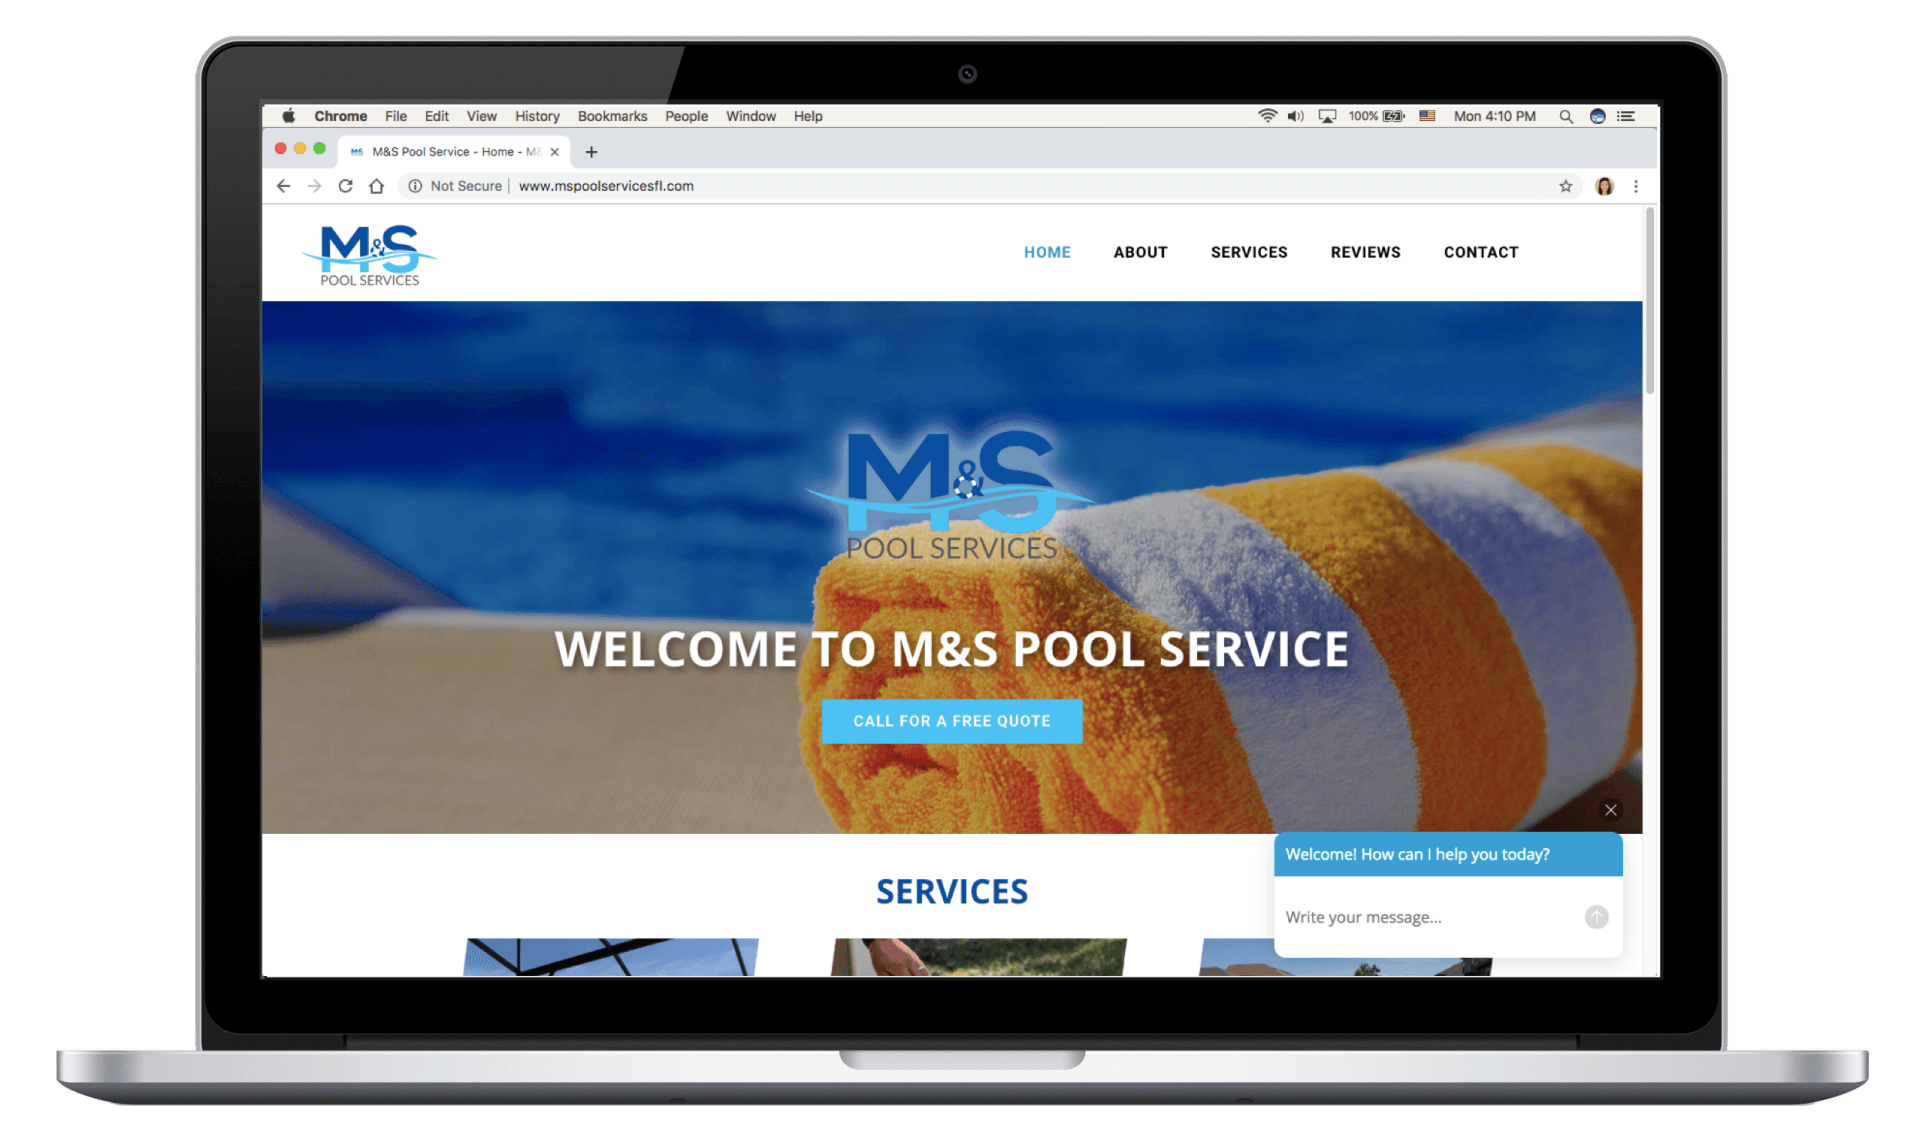 M&S Pool Service